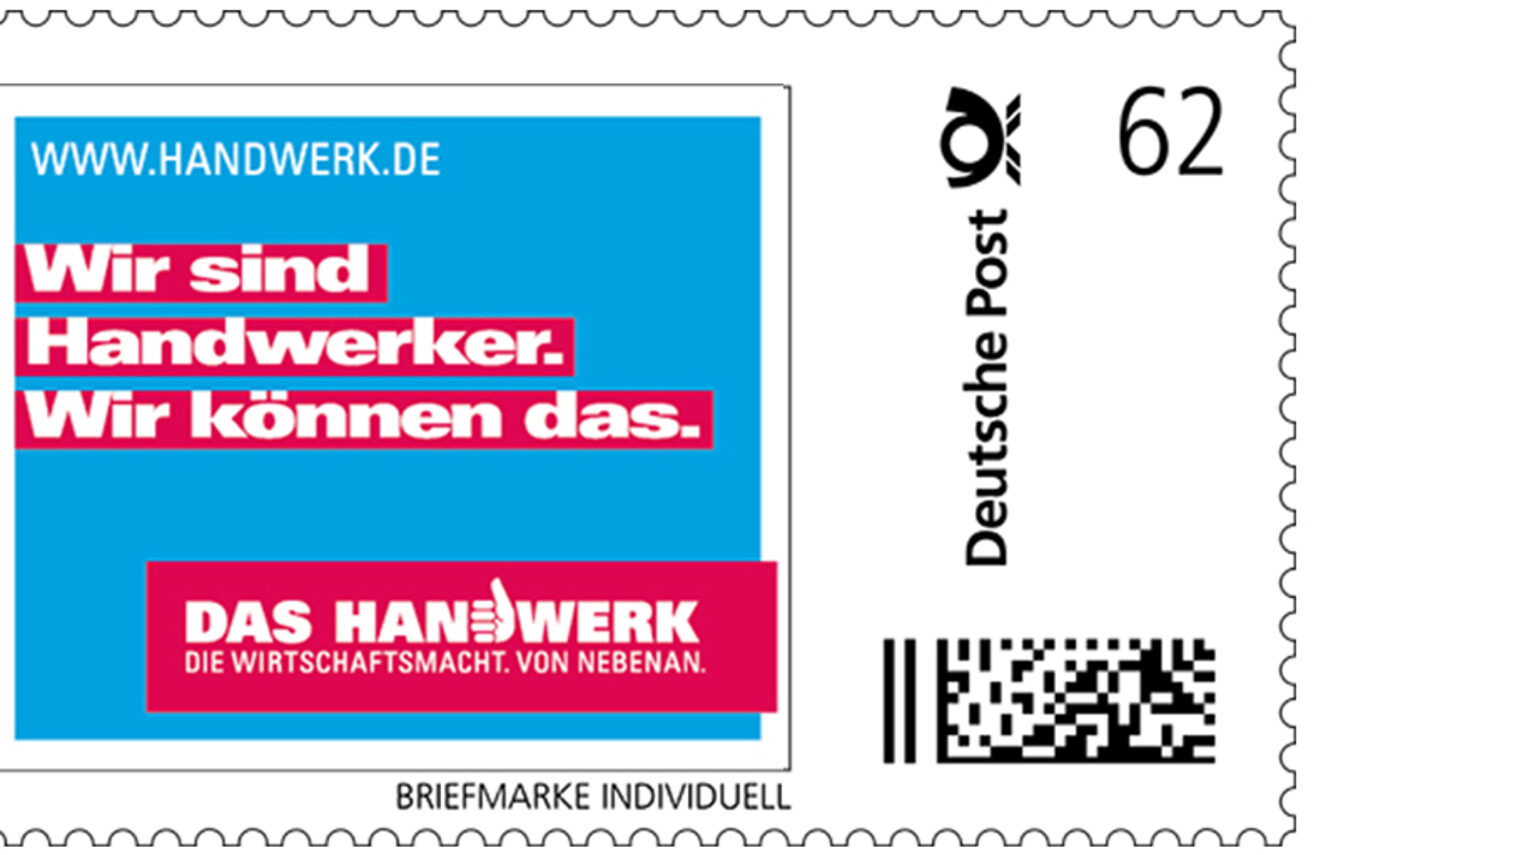 imagekampagne-handwerksbriefmarke